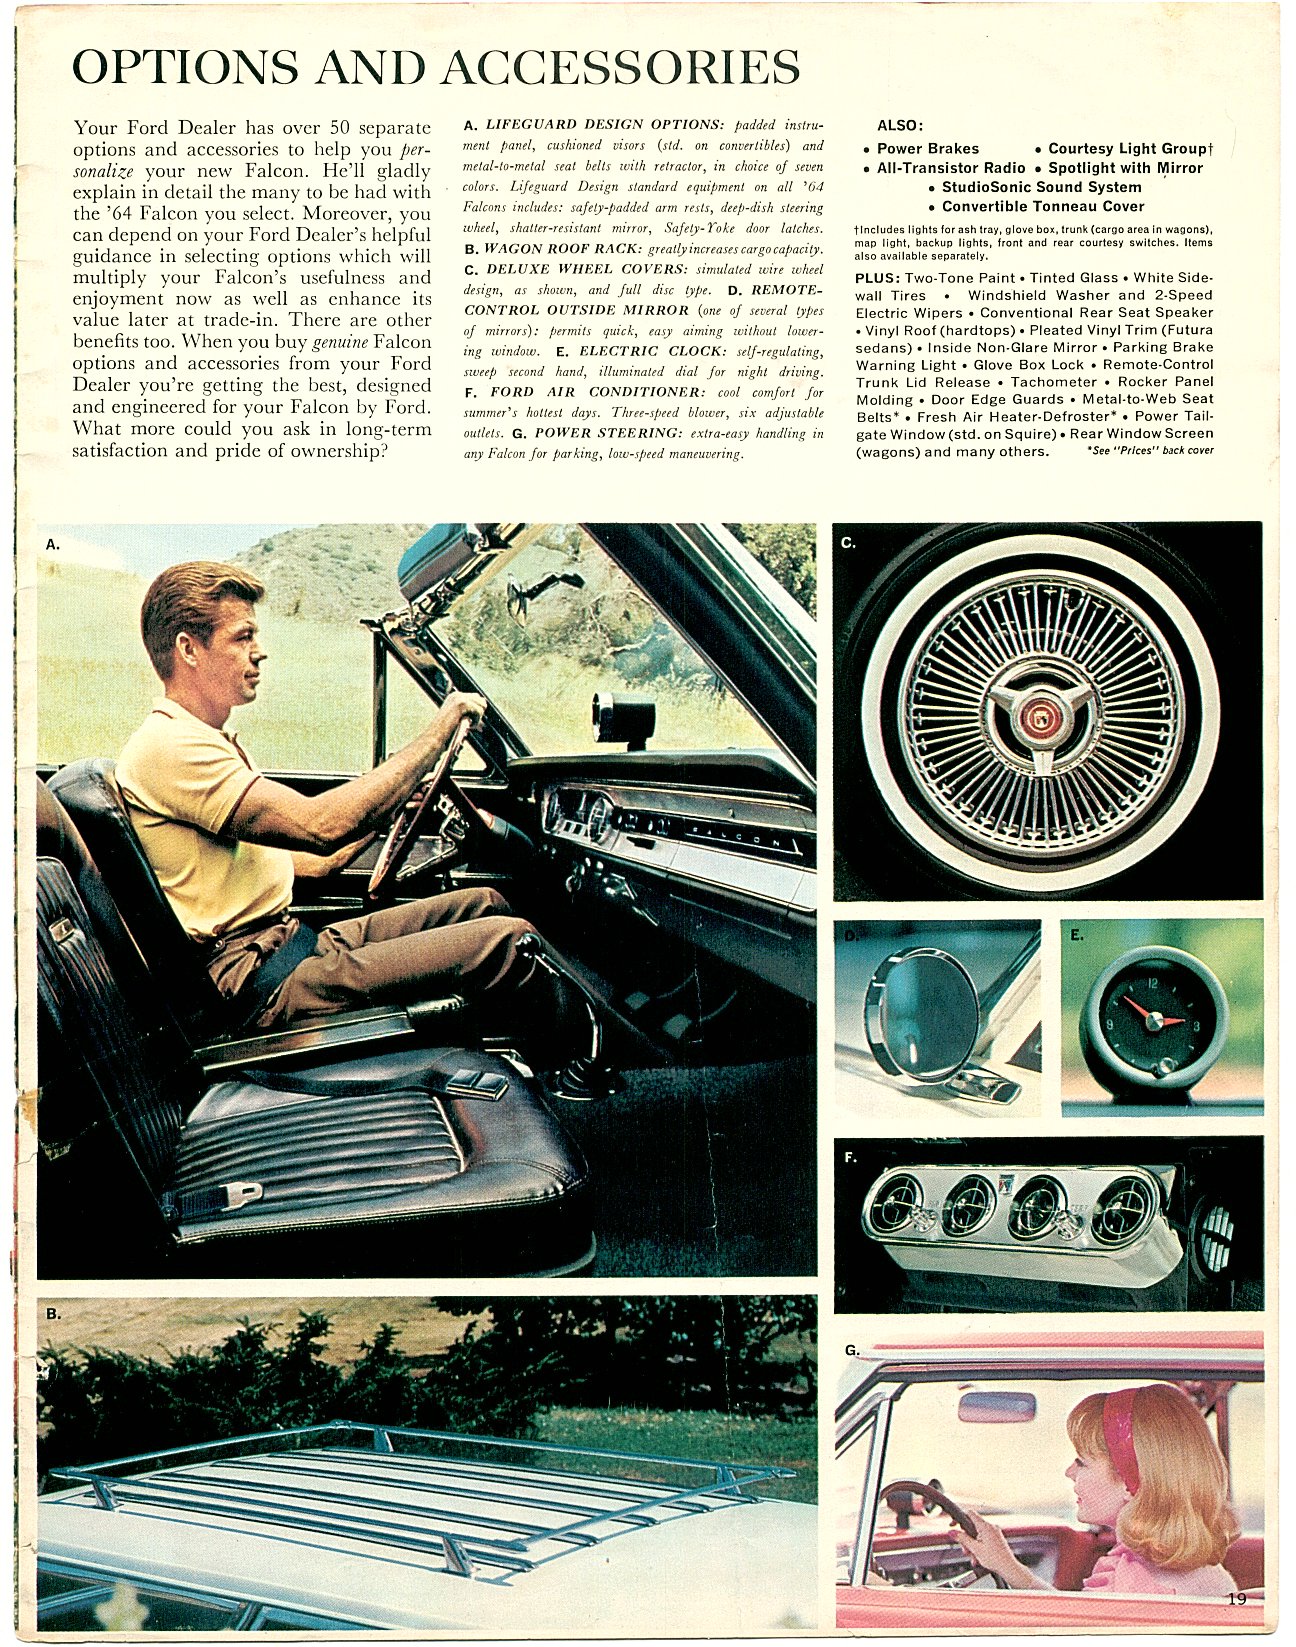 1964 Ford Falcon Brochure Page 12